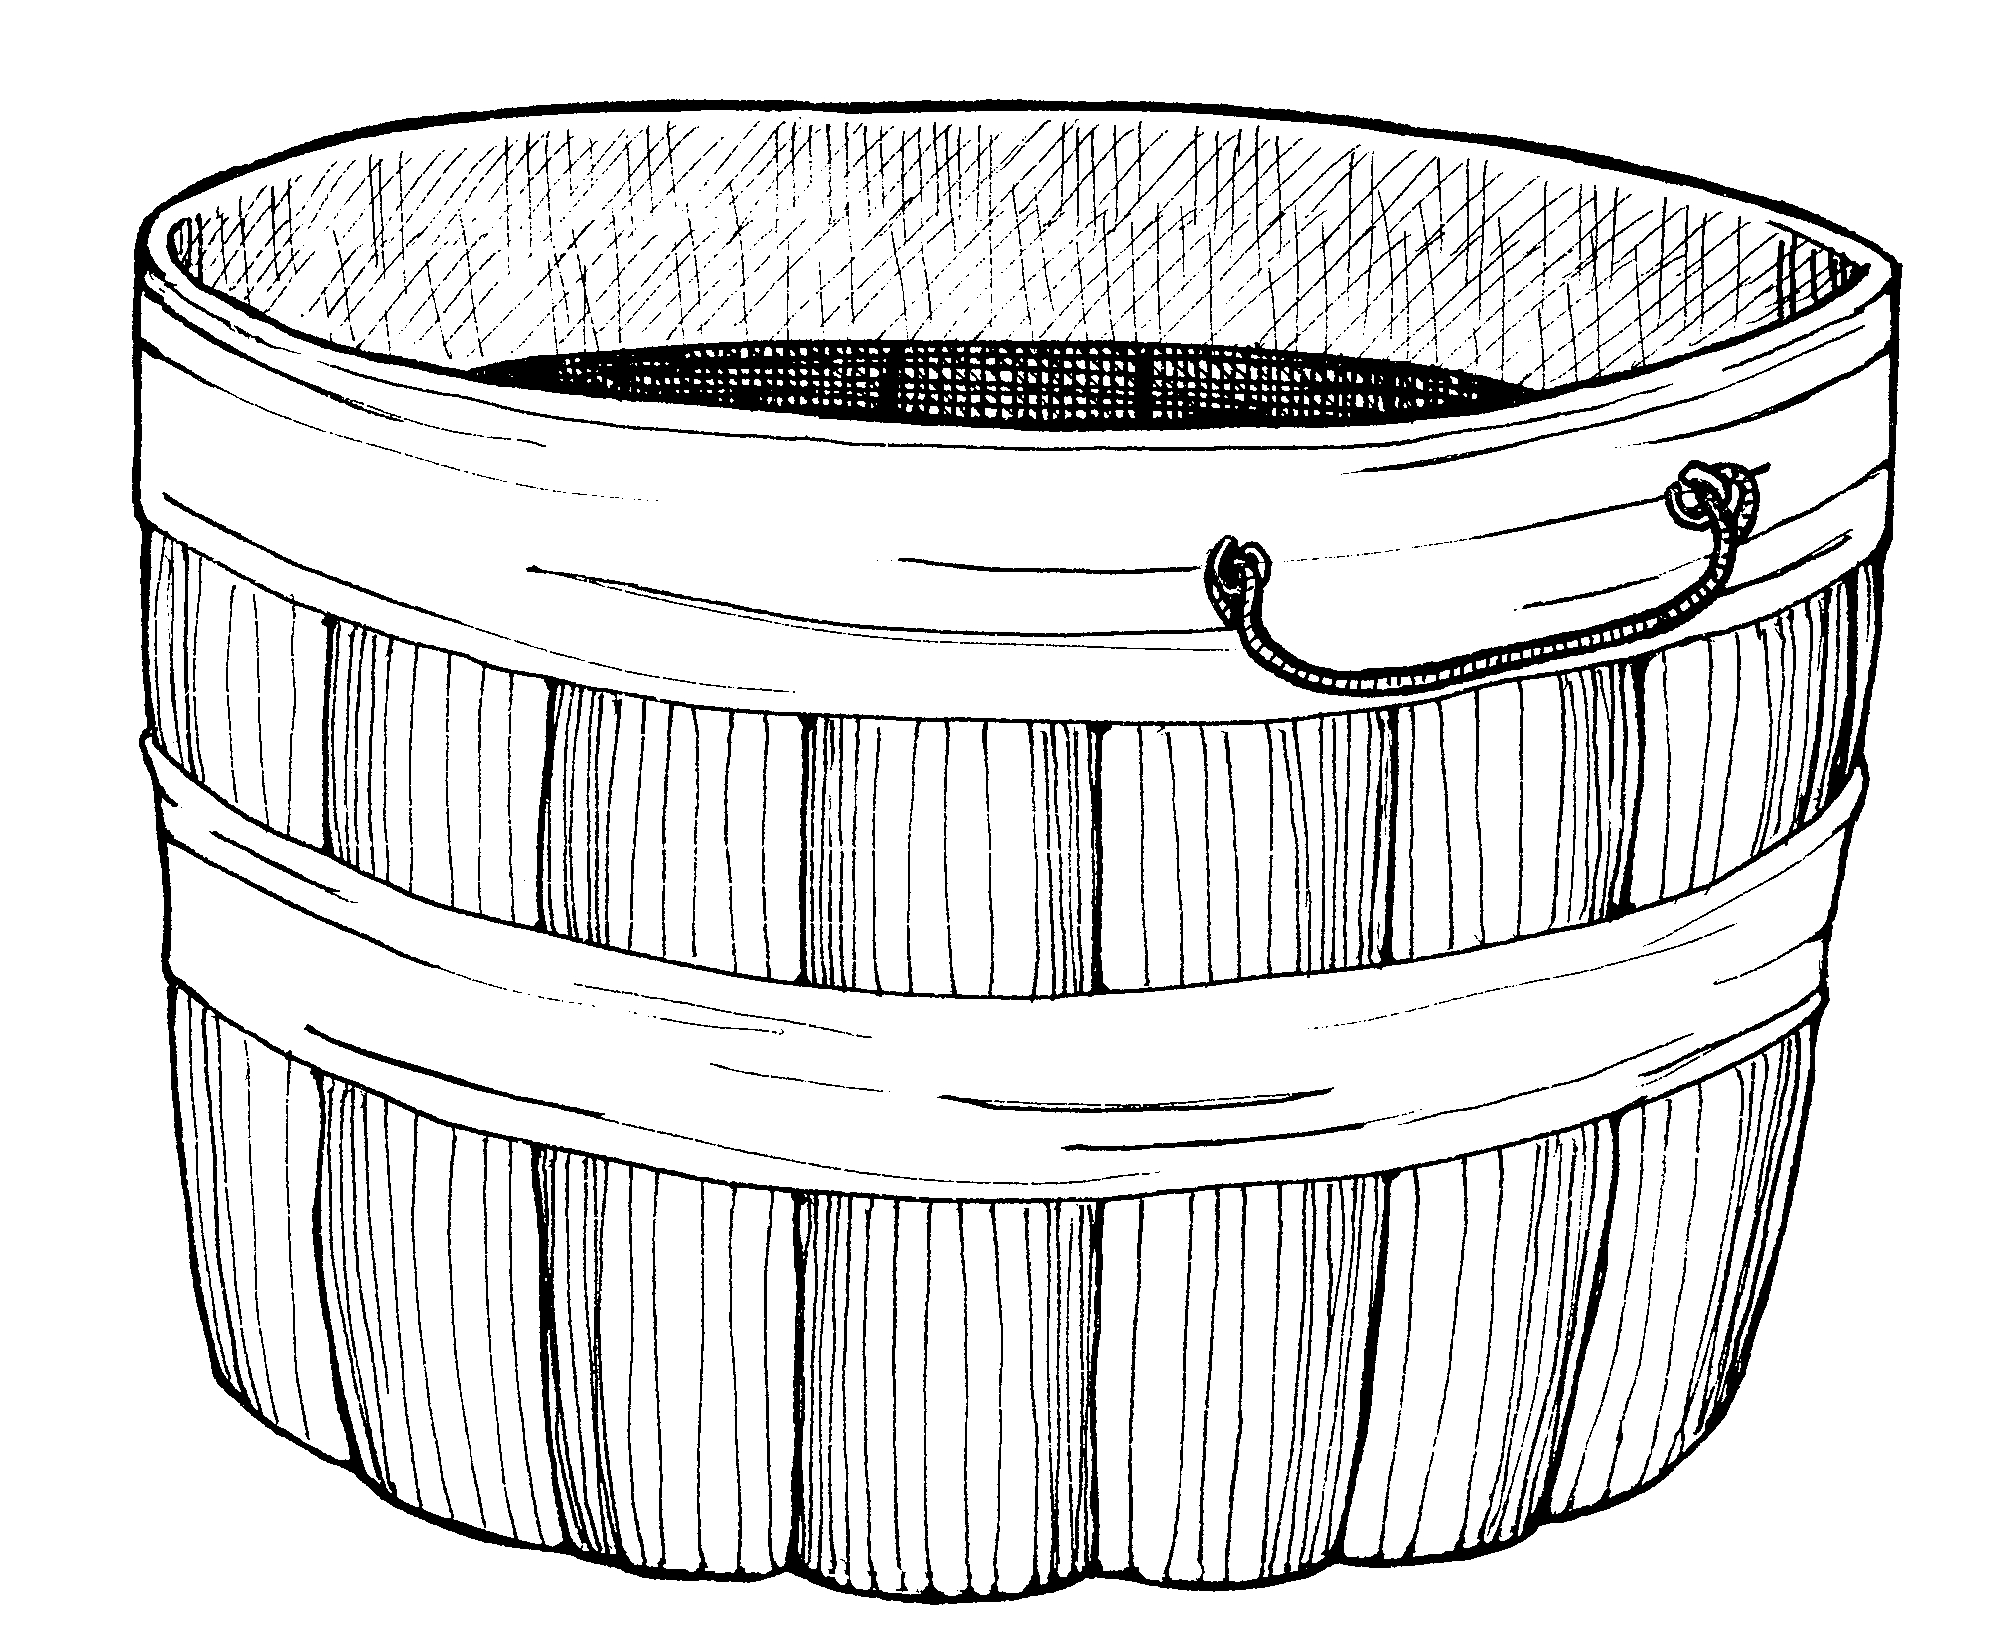 Bushel Basket